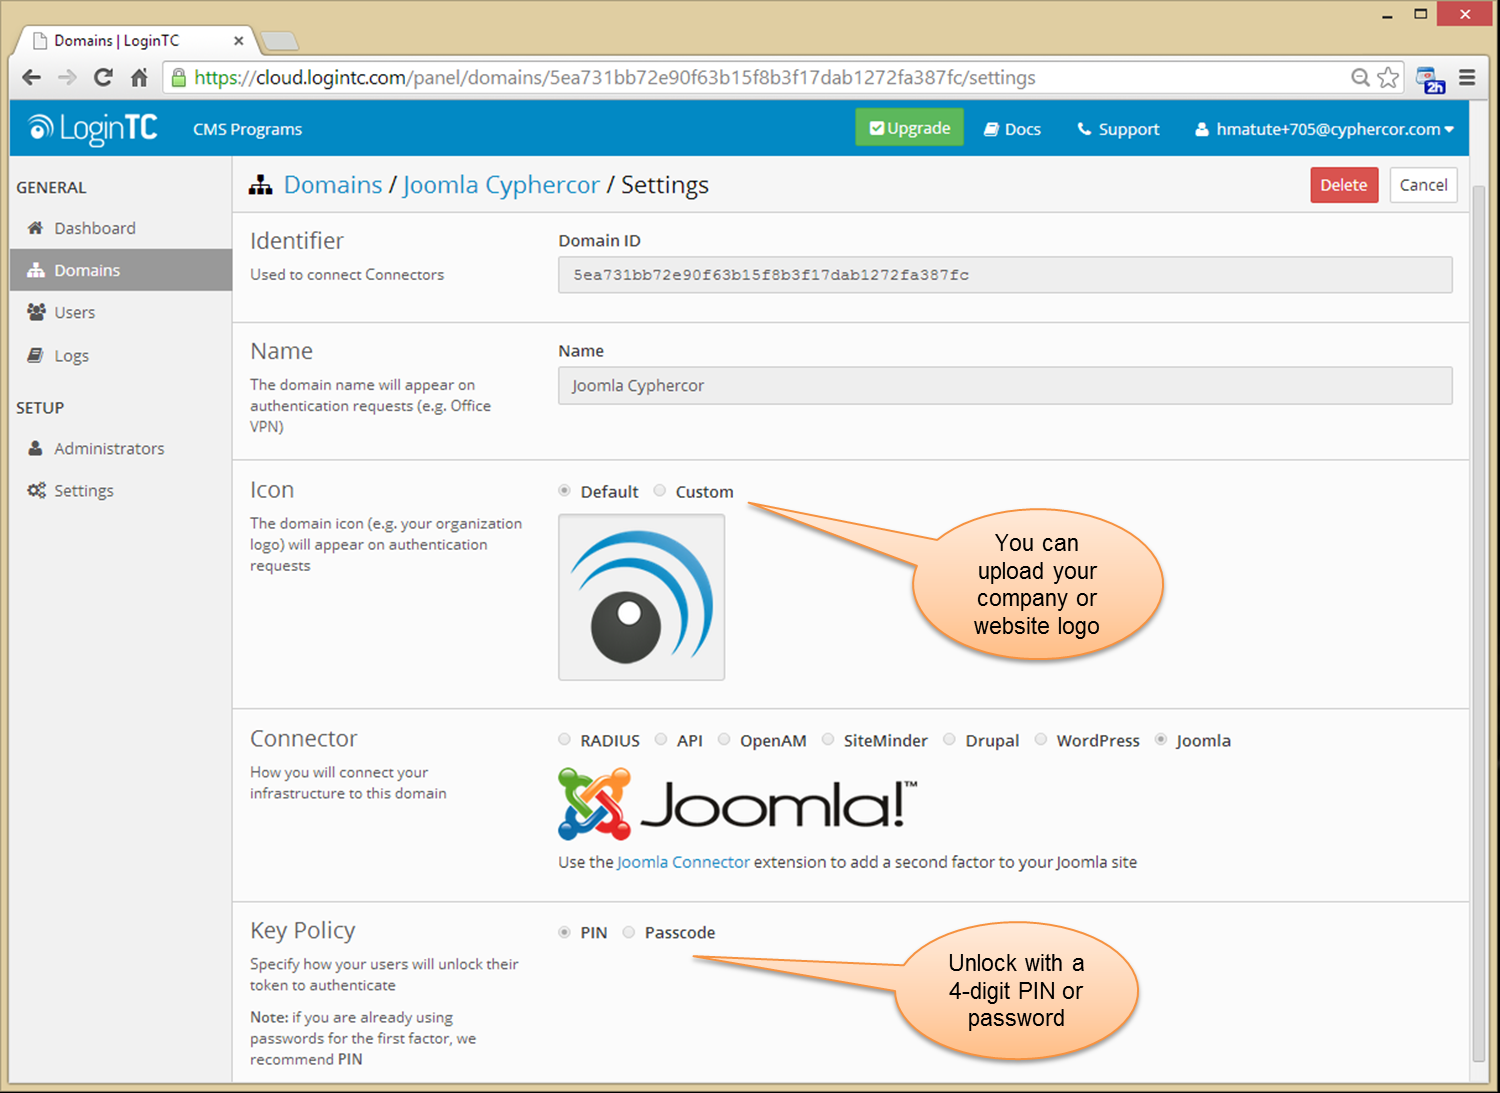 Joomla Connector Configured in LoginTC Admin